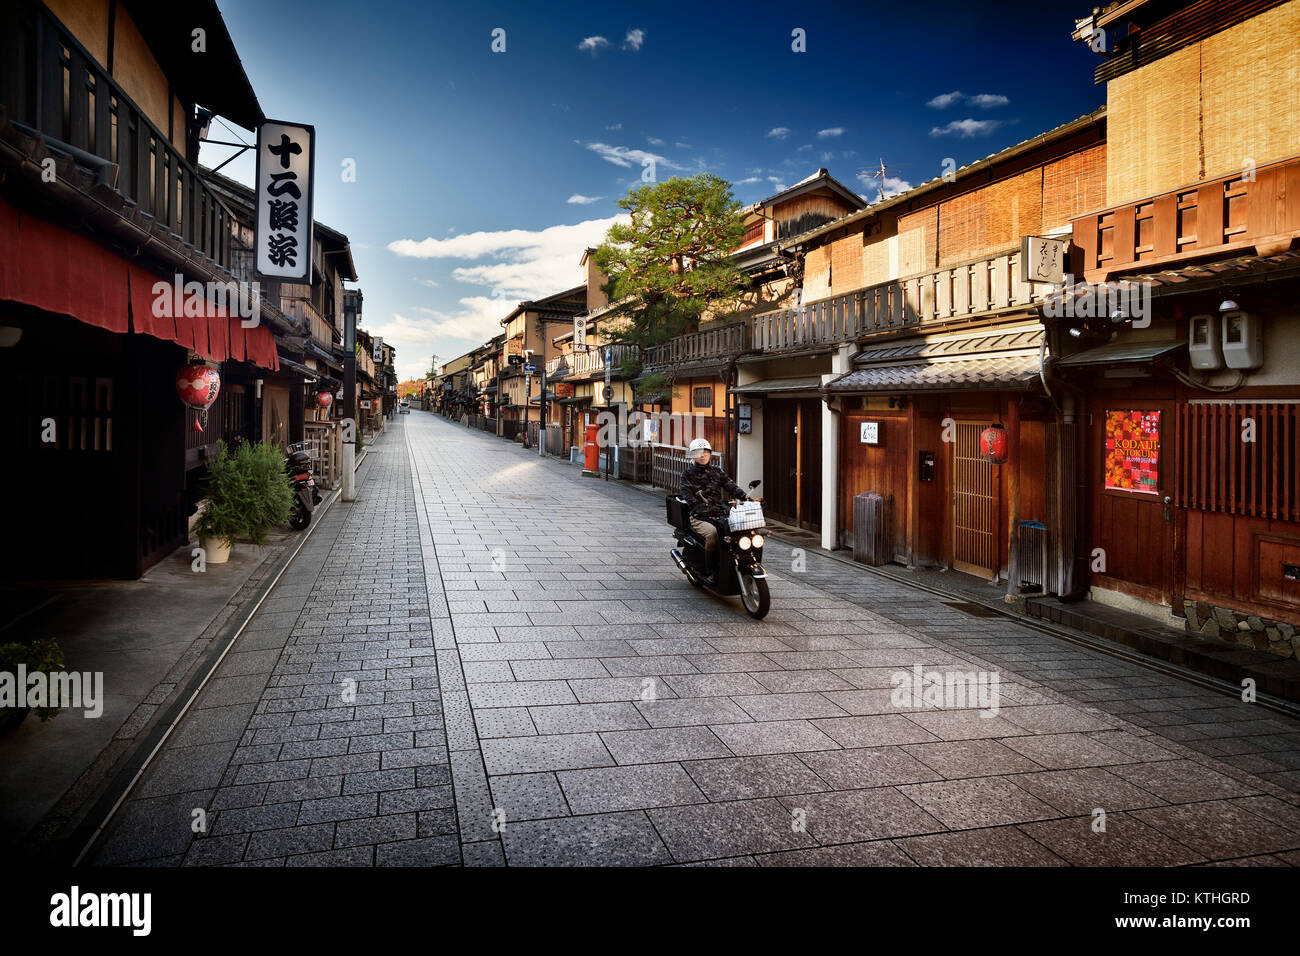 Lizenz und Drucke im MaximImages.com - Historic Streets of Gion, Kyoto, Japan Reise Stock Foto Stockfoto